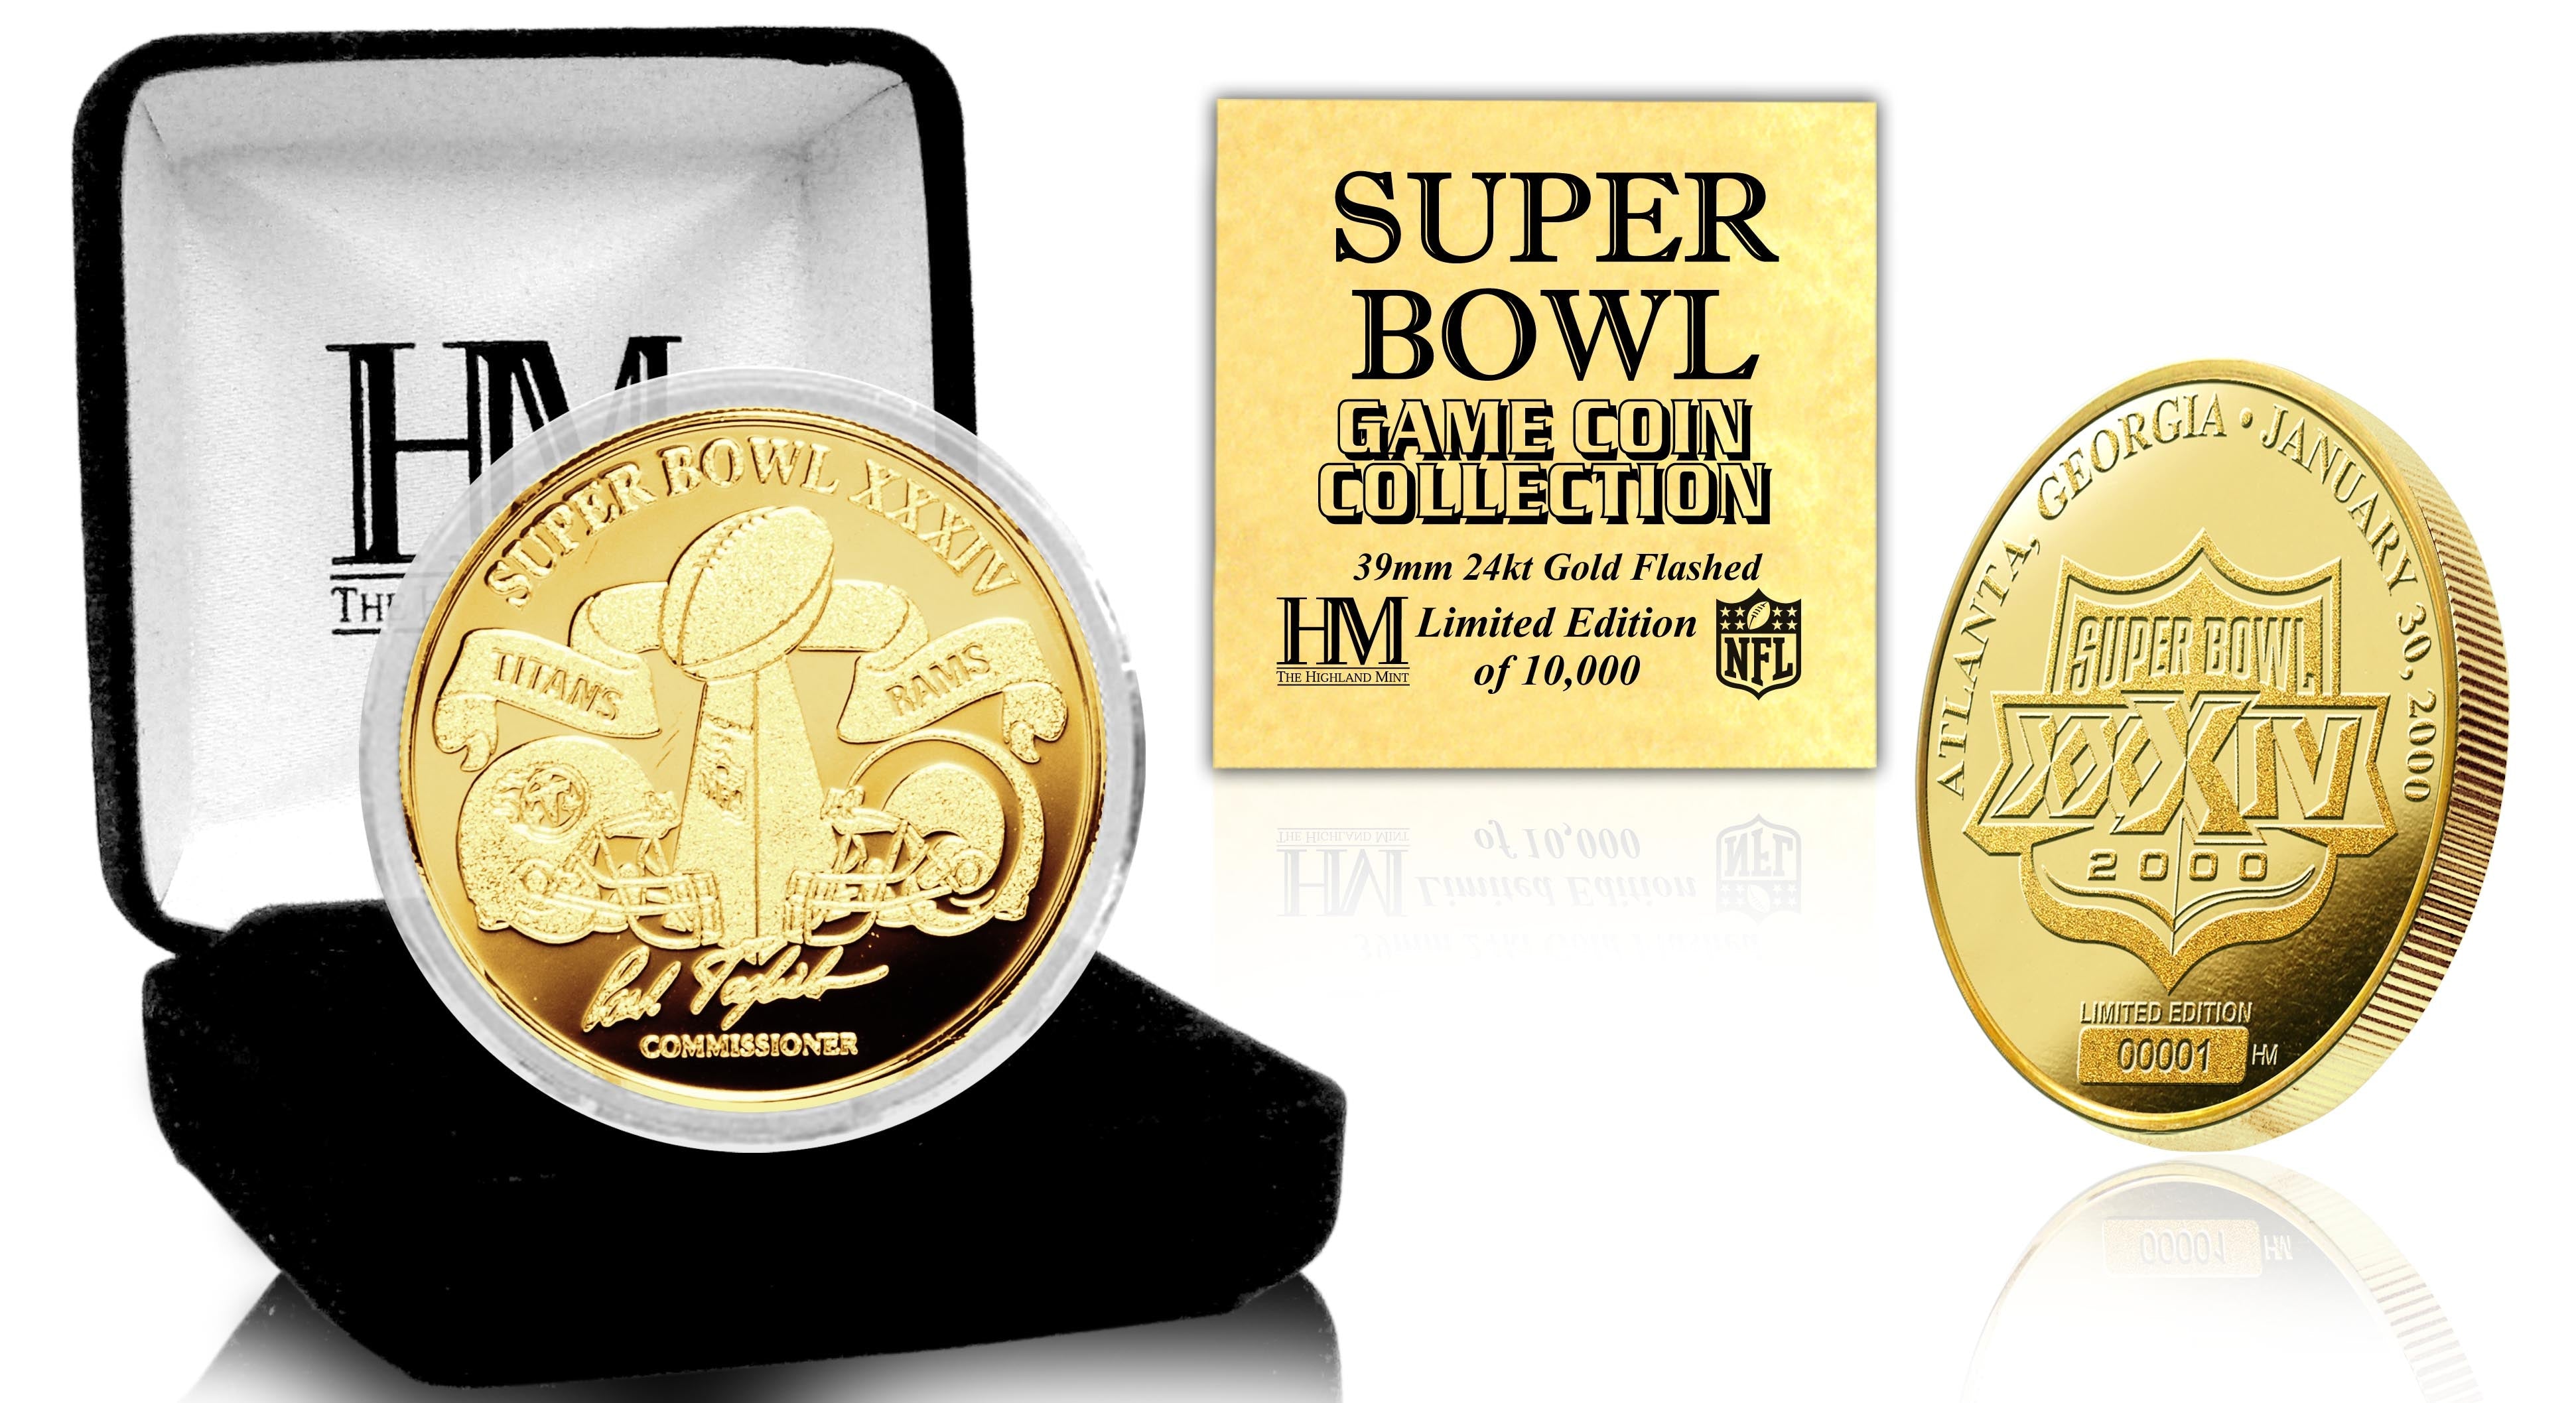 Super Bowl XXXIV 24kt Gold Flip Coin